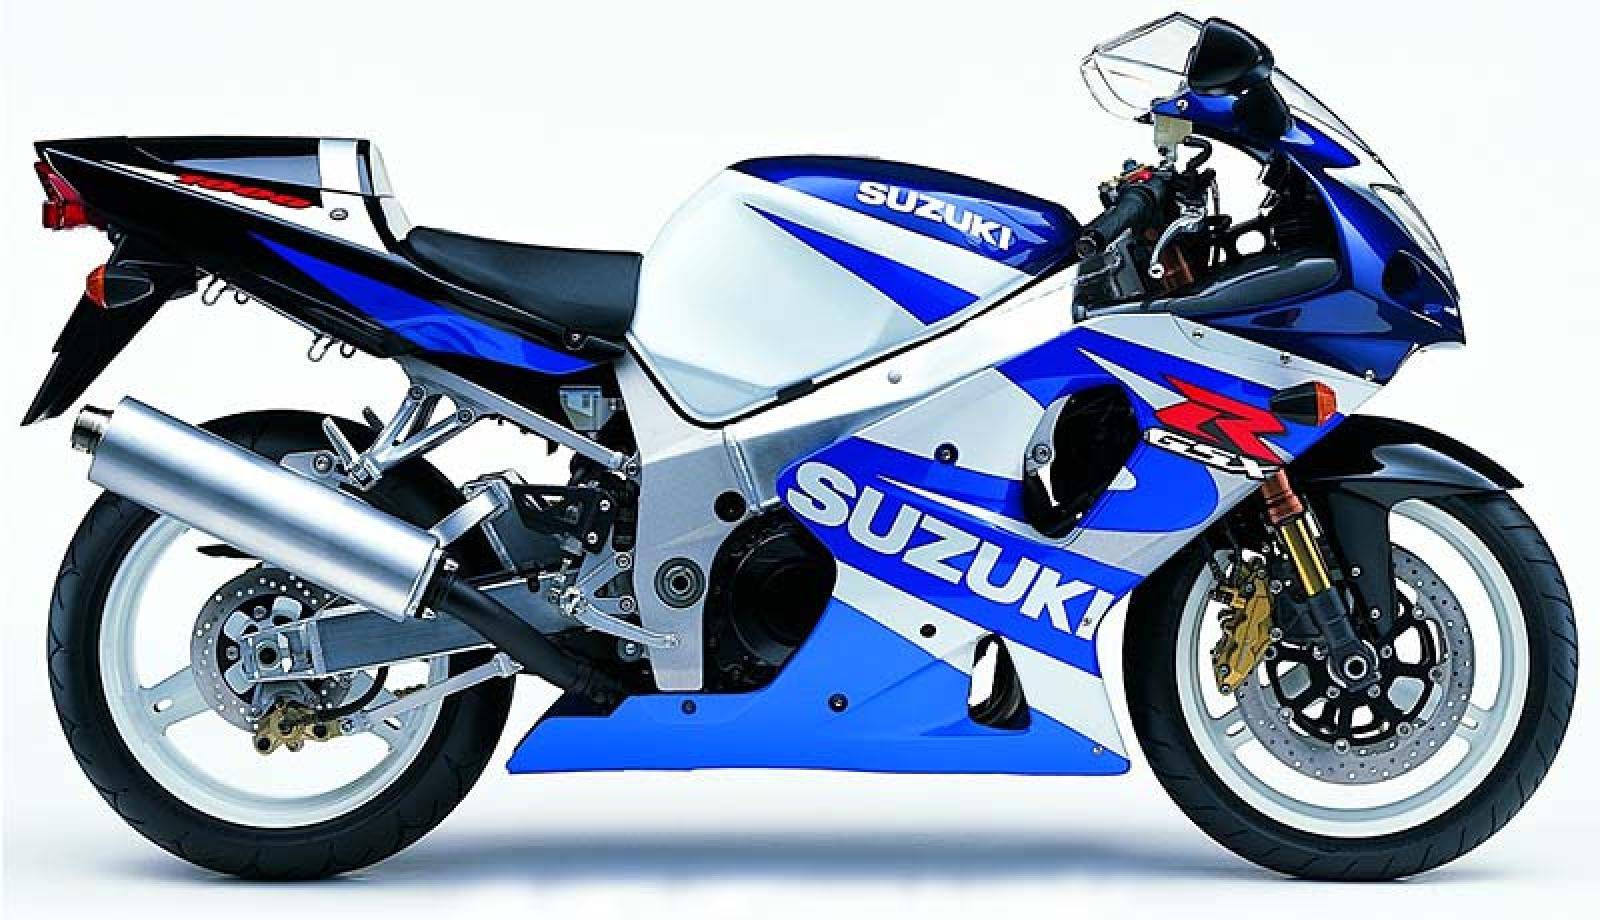 Suzuki gsx-r1000 k7: тест-драйв от моторевю (владимир здоров)